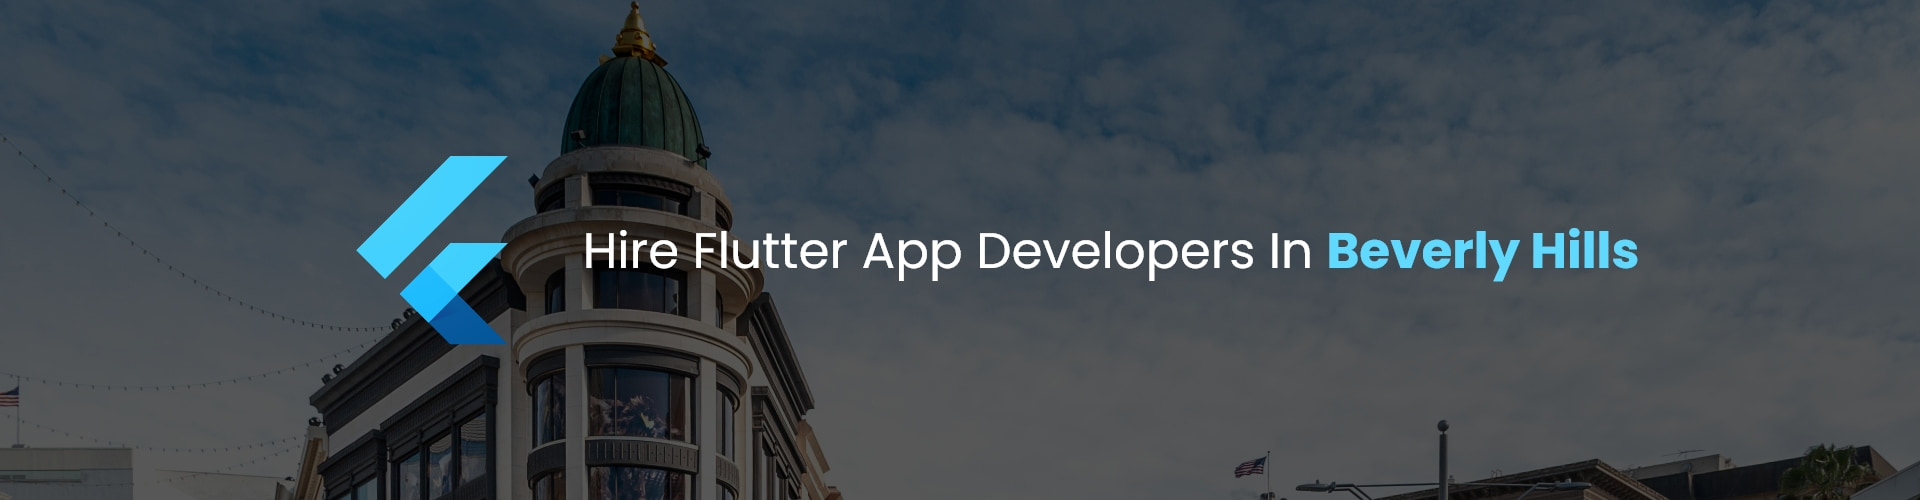 hire flutter app developers in beverly hills